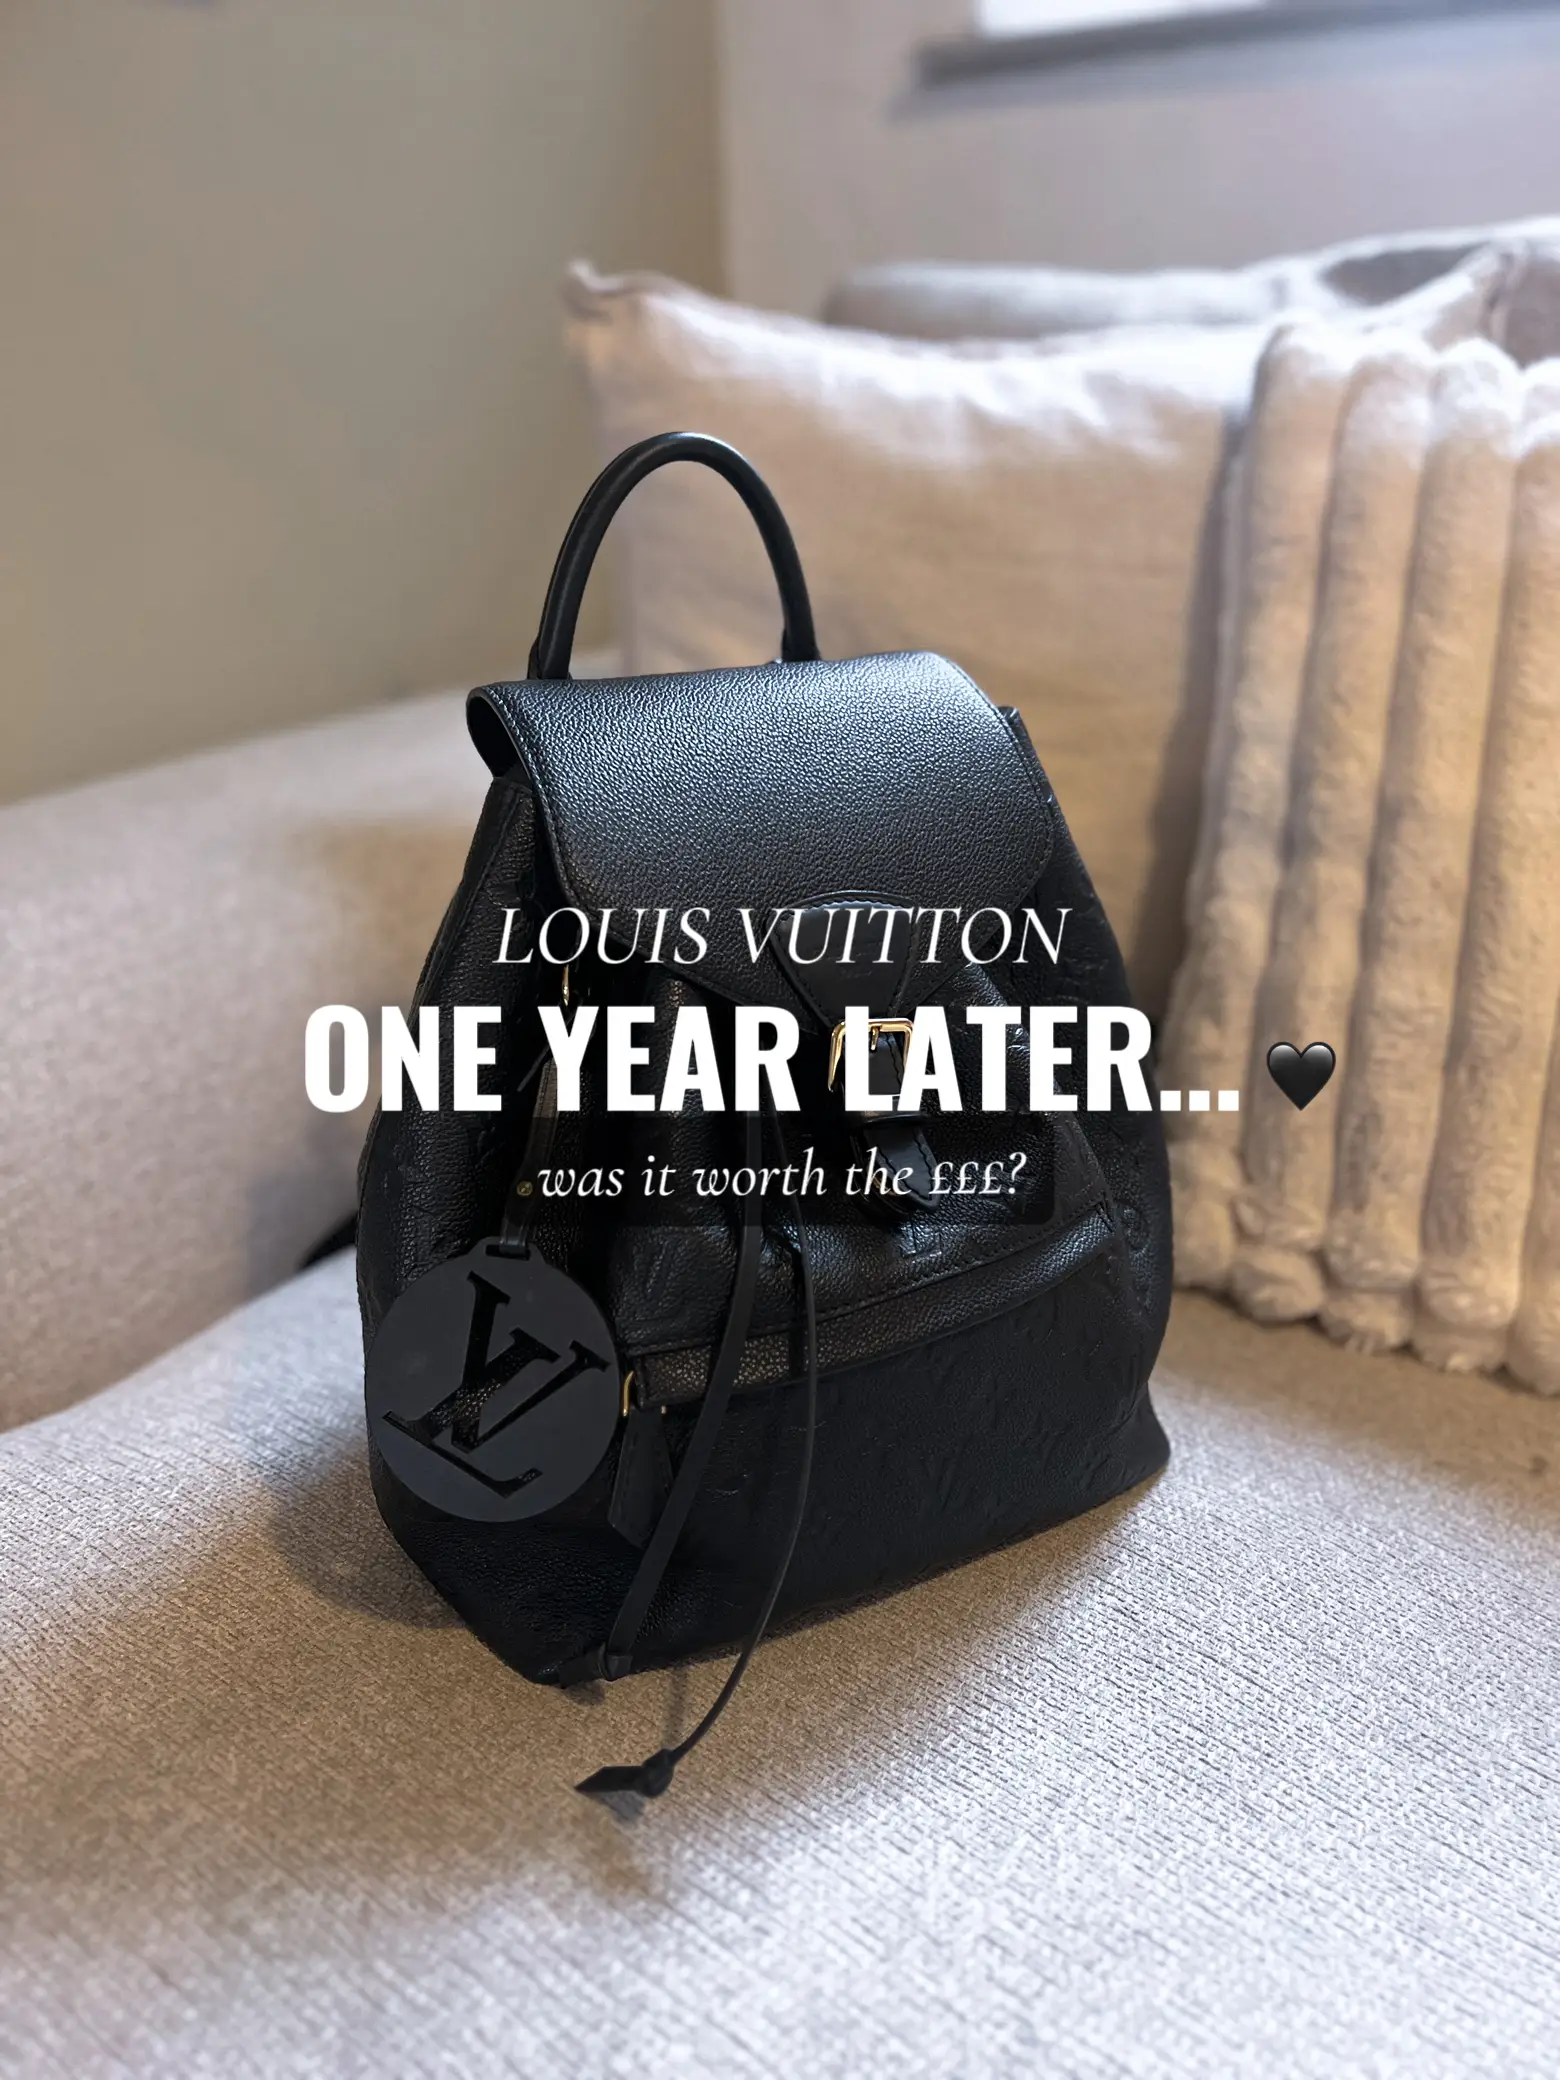 Luxury Bag Review/ Haul: Louis Vuitton Speedy 35 Epi